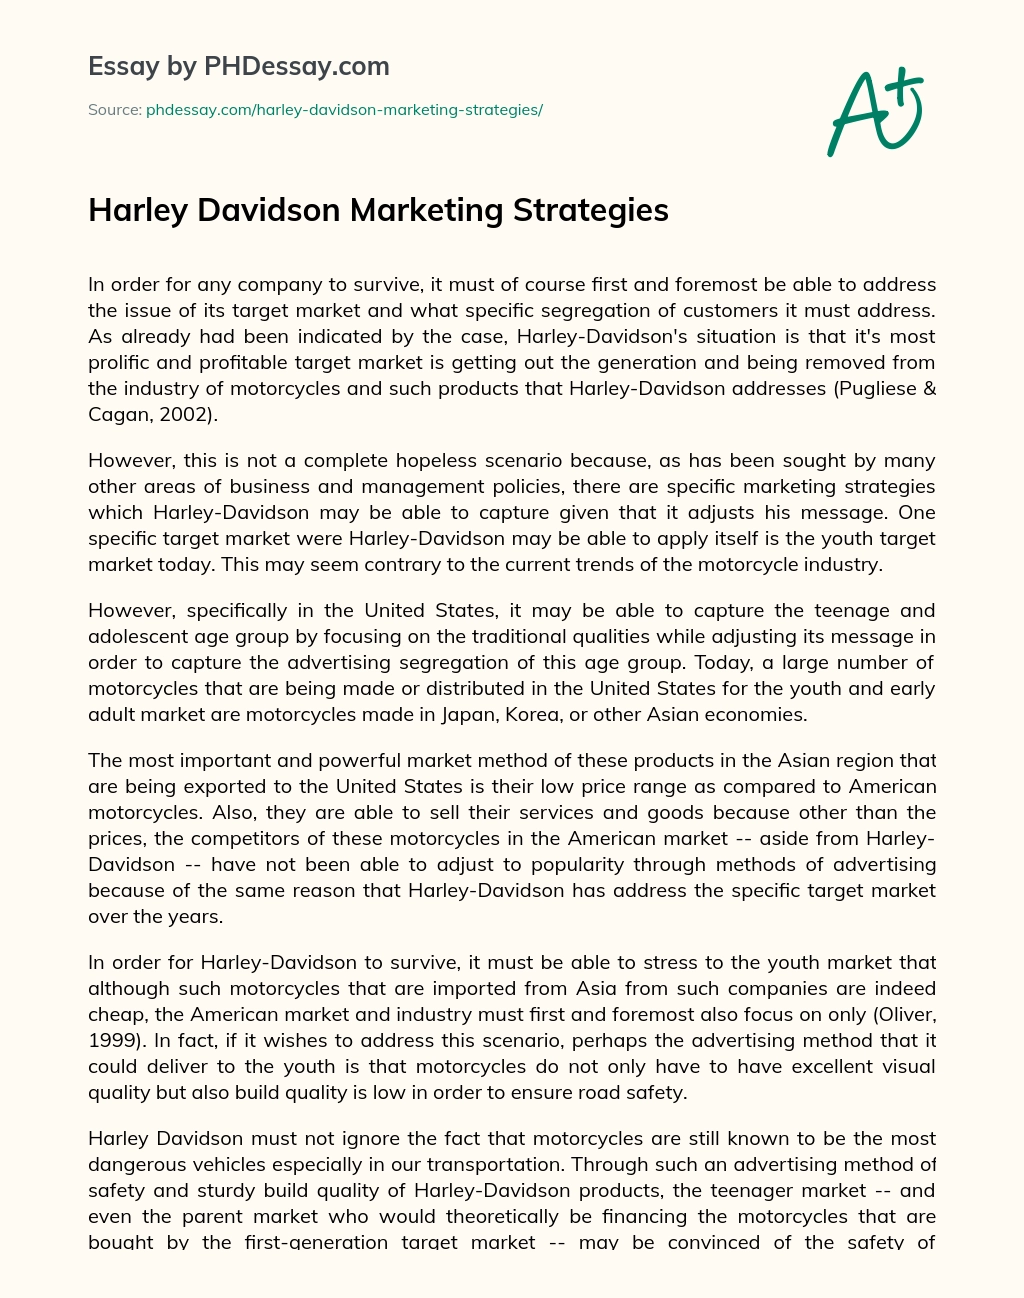 Harley Davidson Marketing Strategies essay